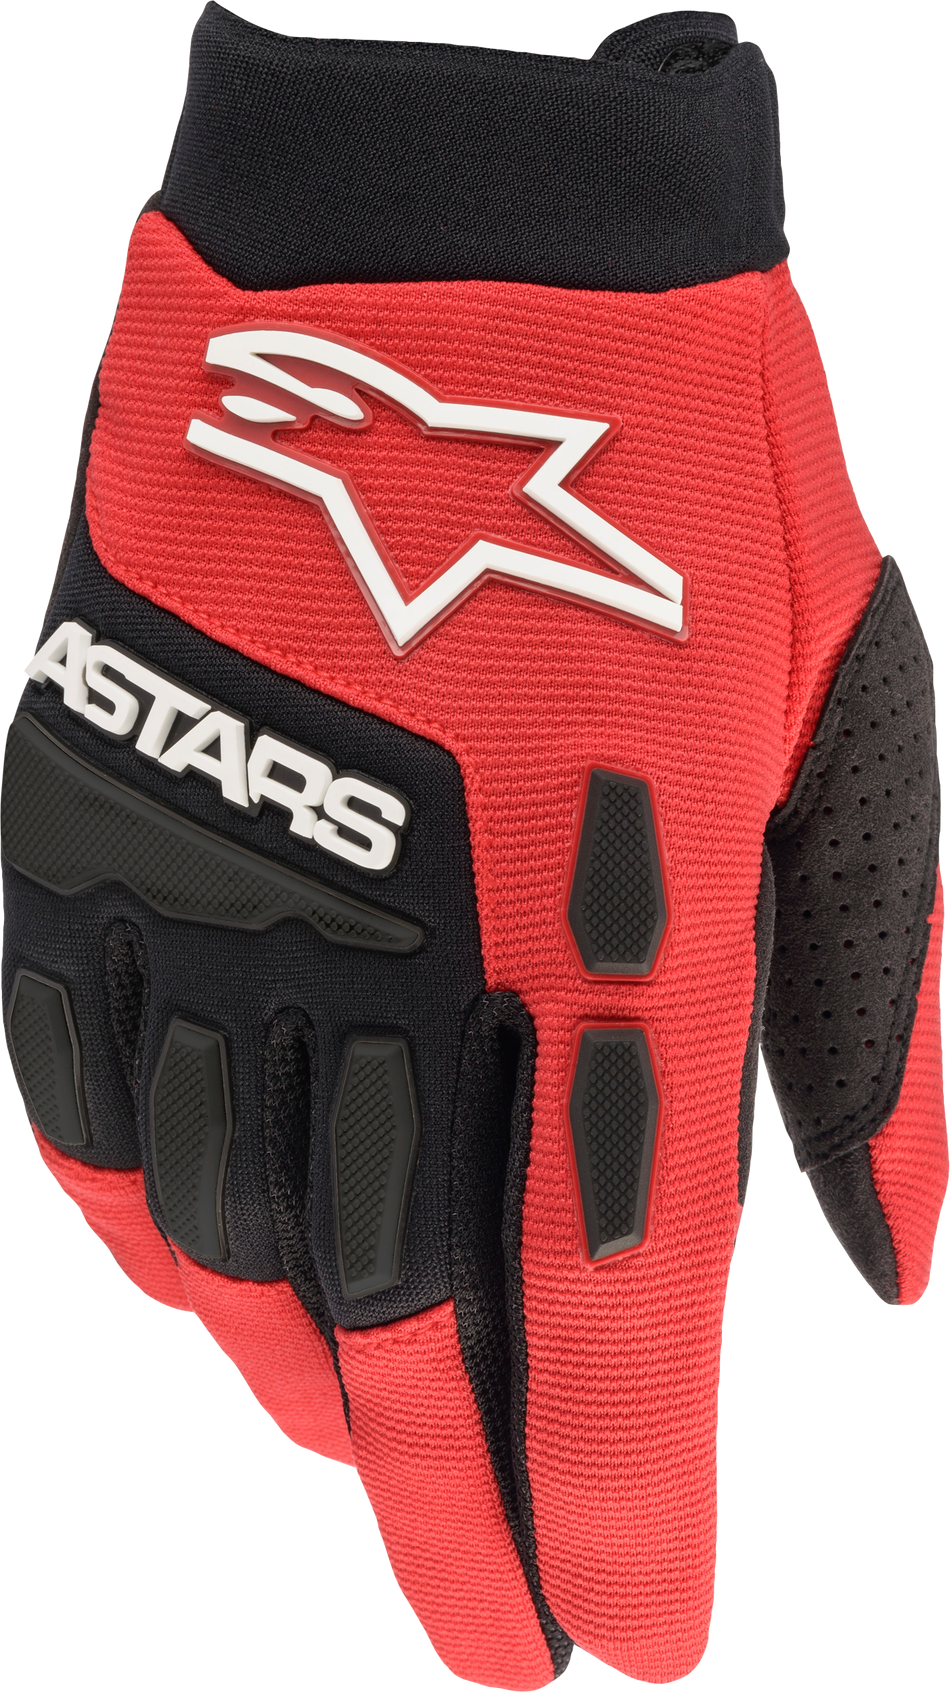 ALPINESTARS Full Bore Gloves Bright Red/Black Lg 3563622-3031-L